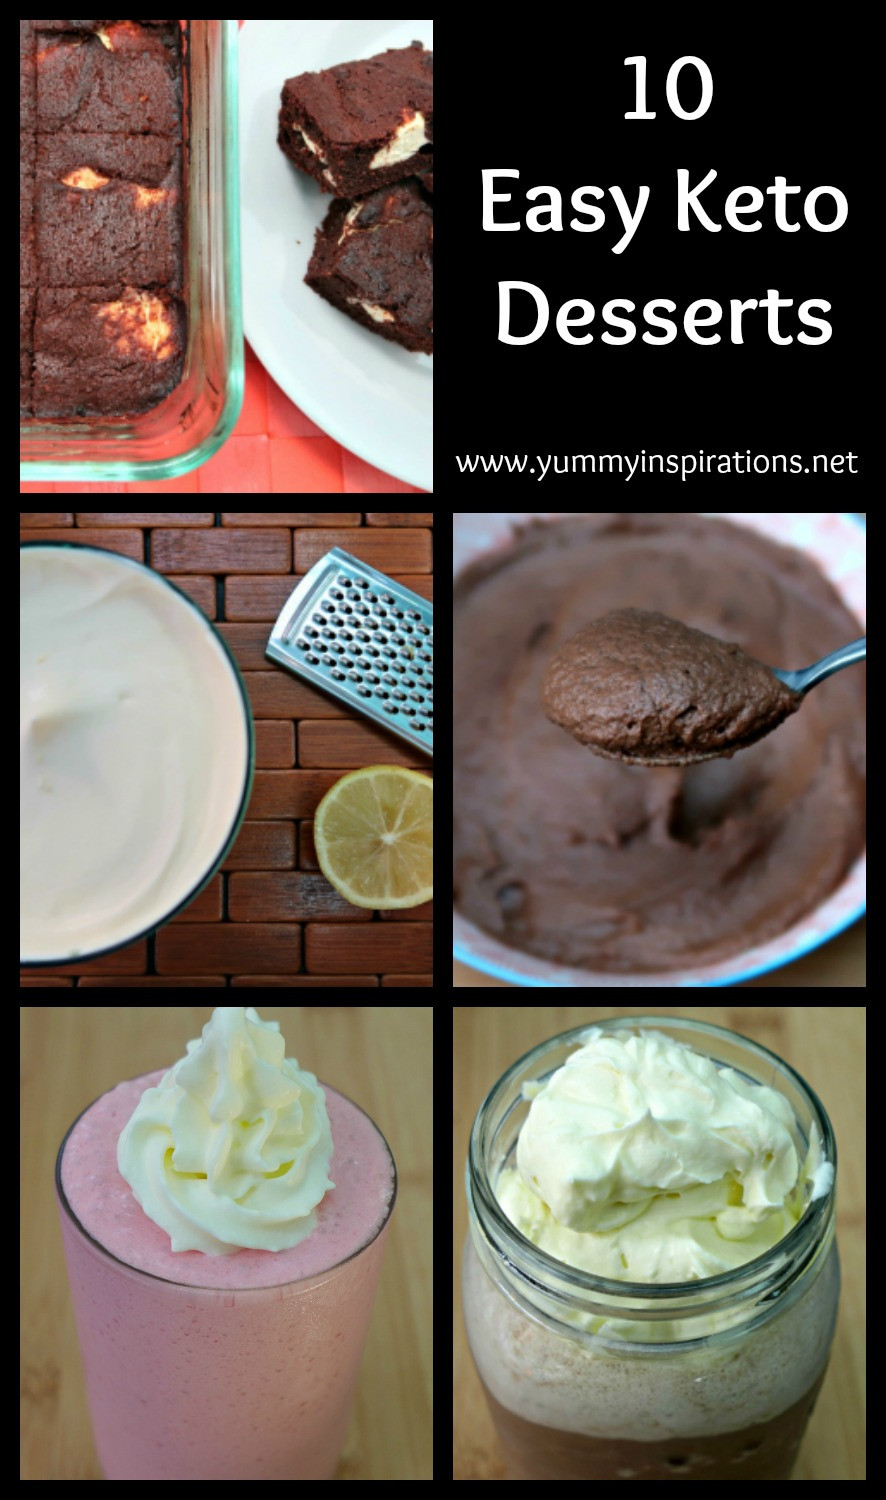 Keto Friendly Desserts To Buy
 10 Easy Keto Desserts Simple Ketogenic Dessert Recipes